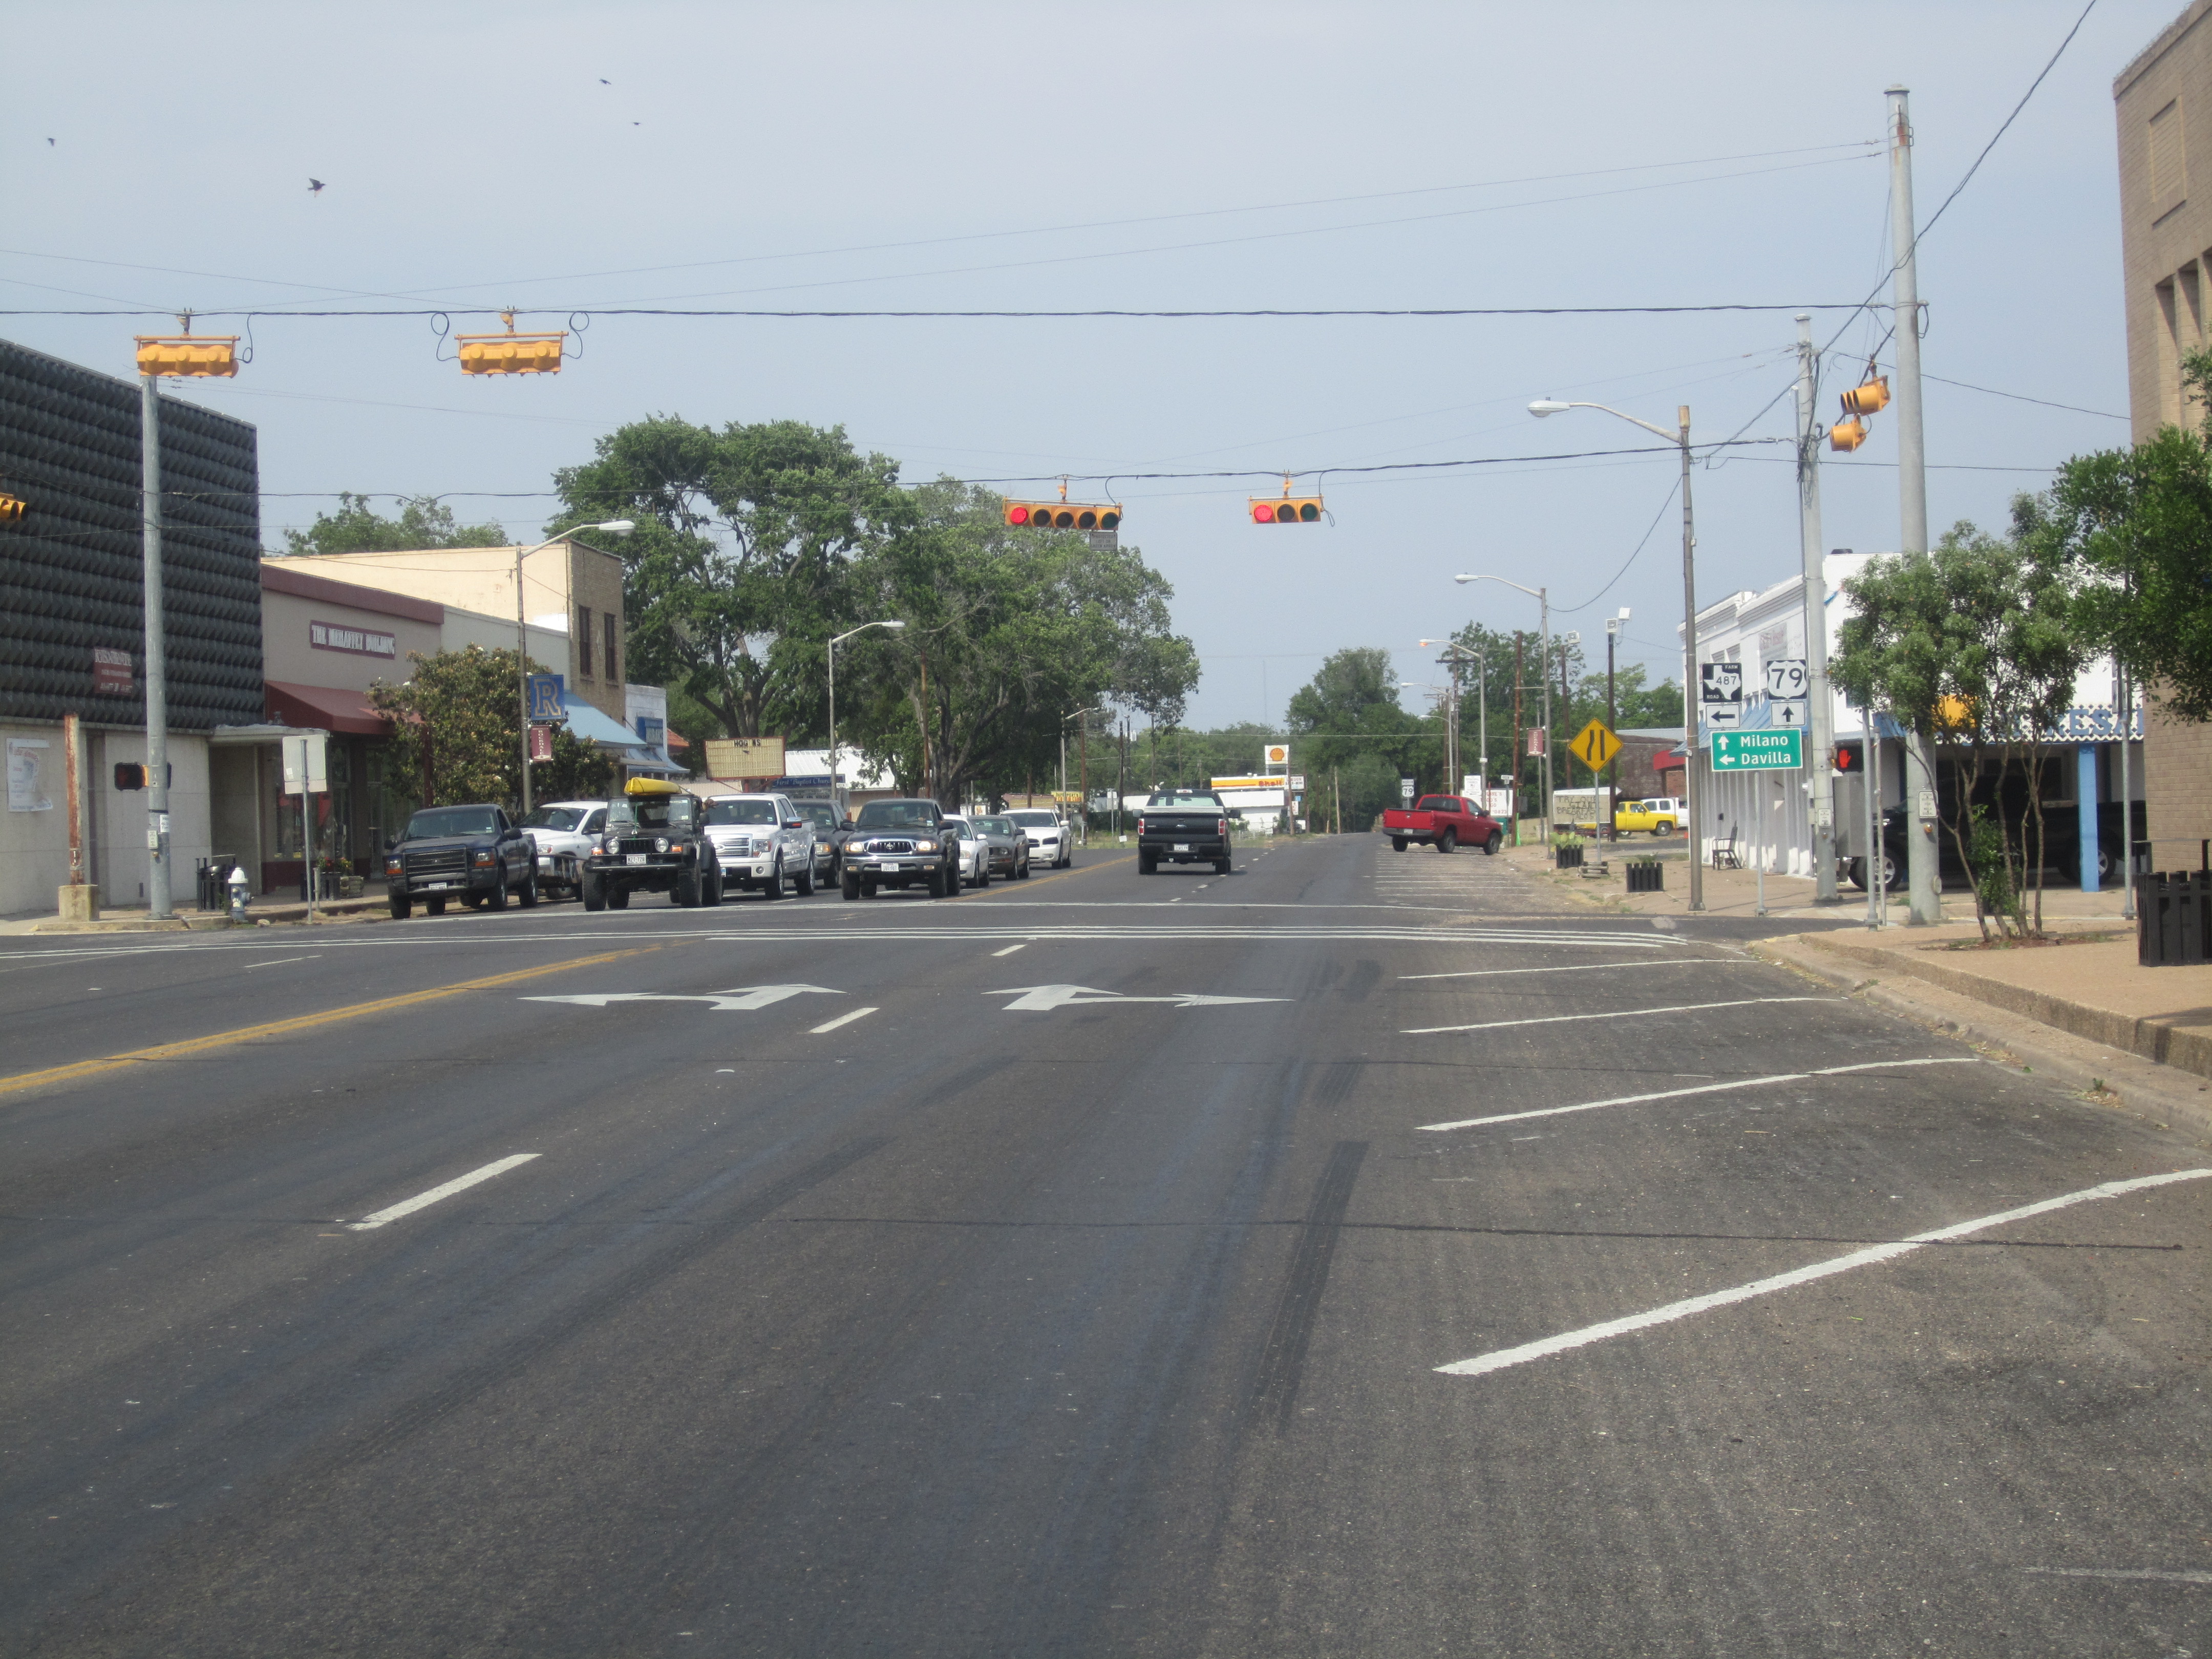 File:U.S. Route 79 is main street of Rockdale, TX IMG 2255.JPG - Wikimedia Commons